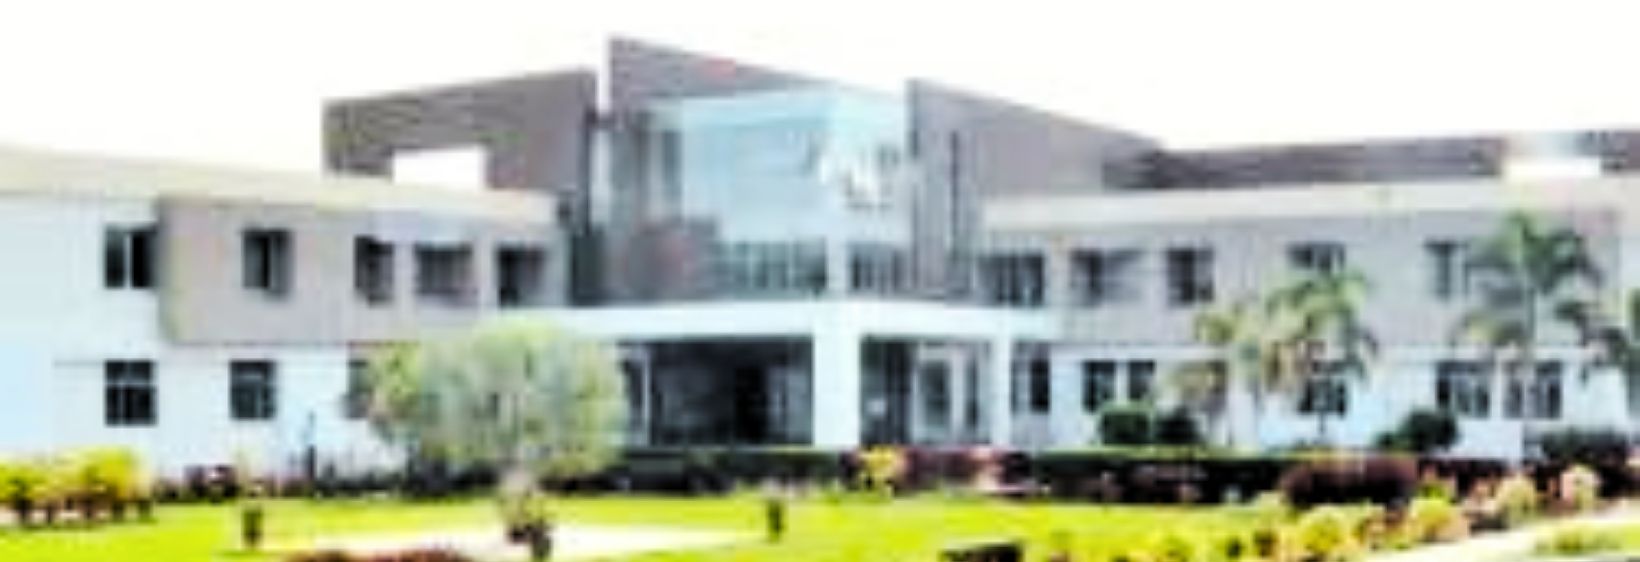 SDM Trust's Danigond College of Nursing - Bagalkot